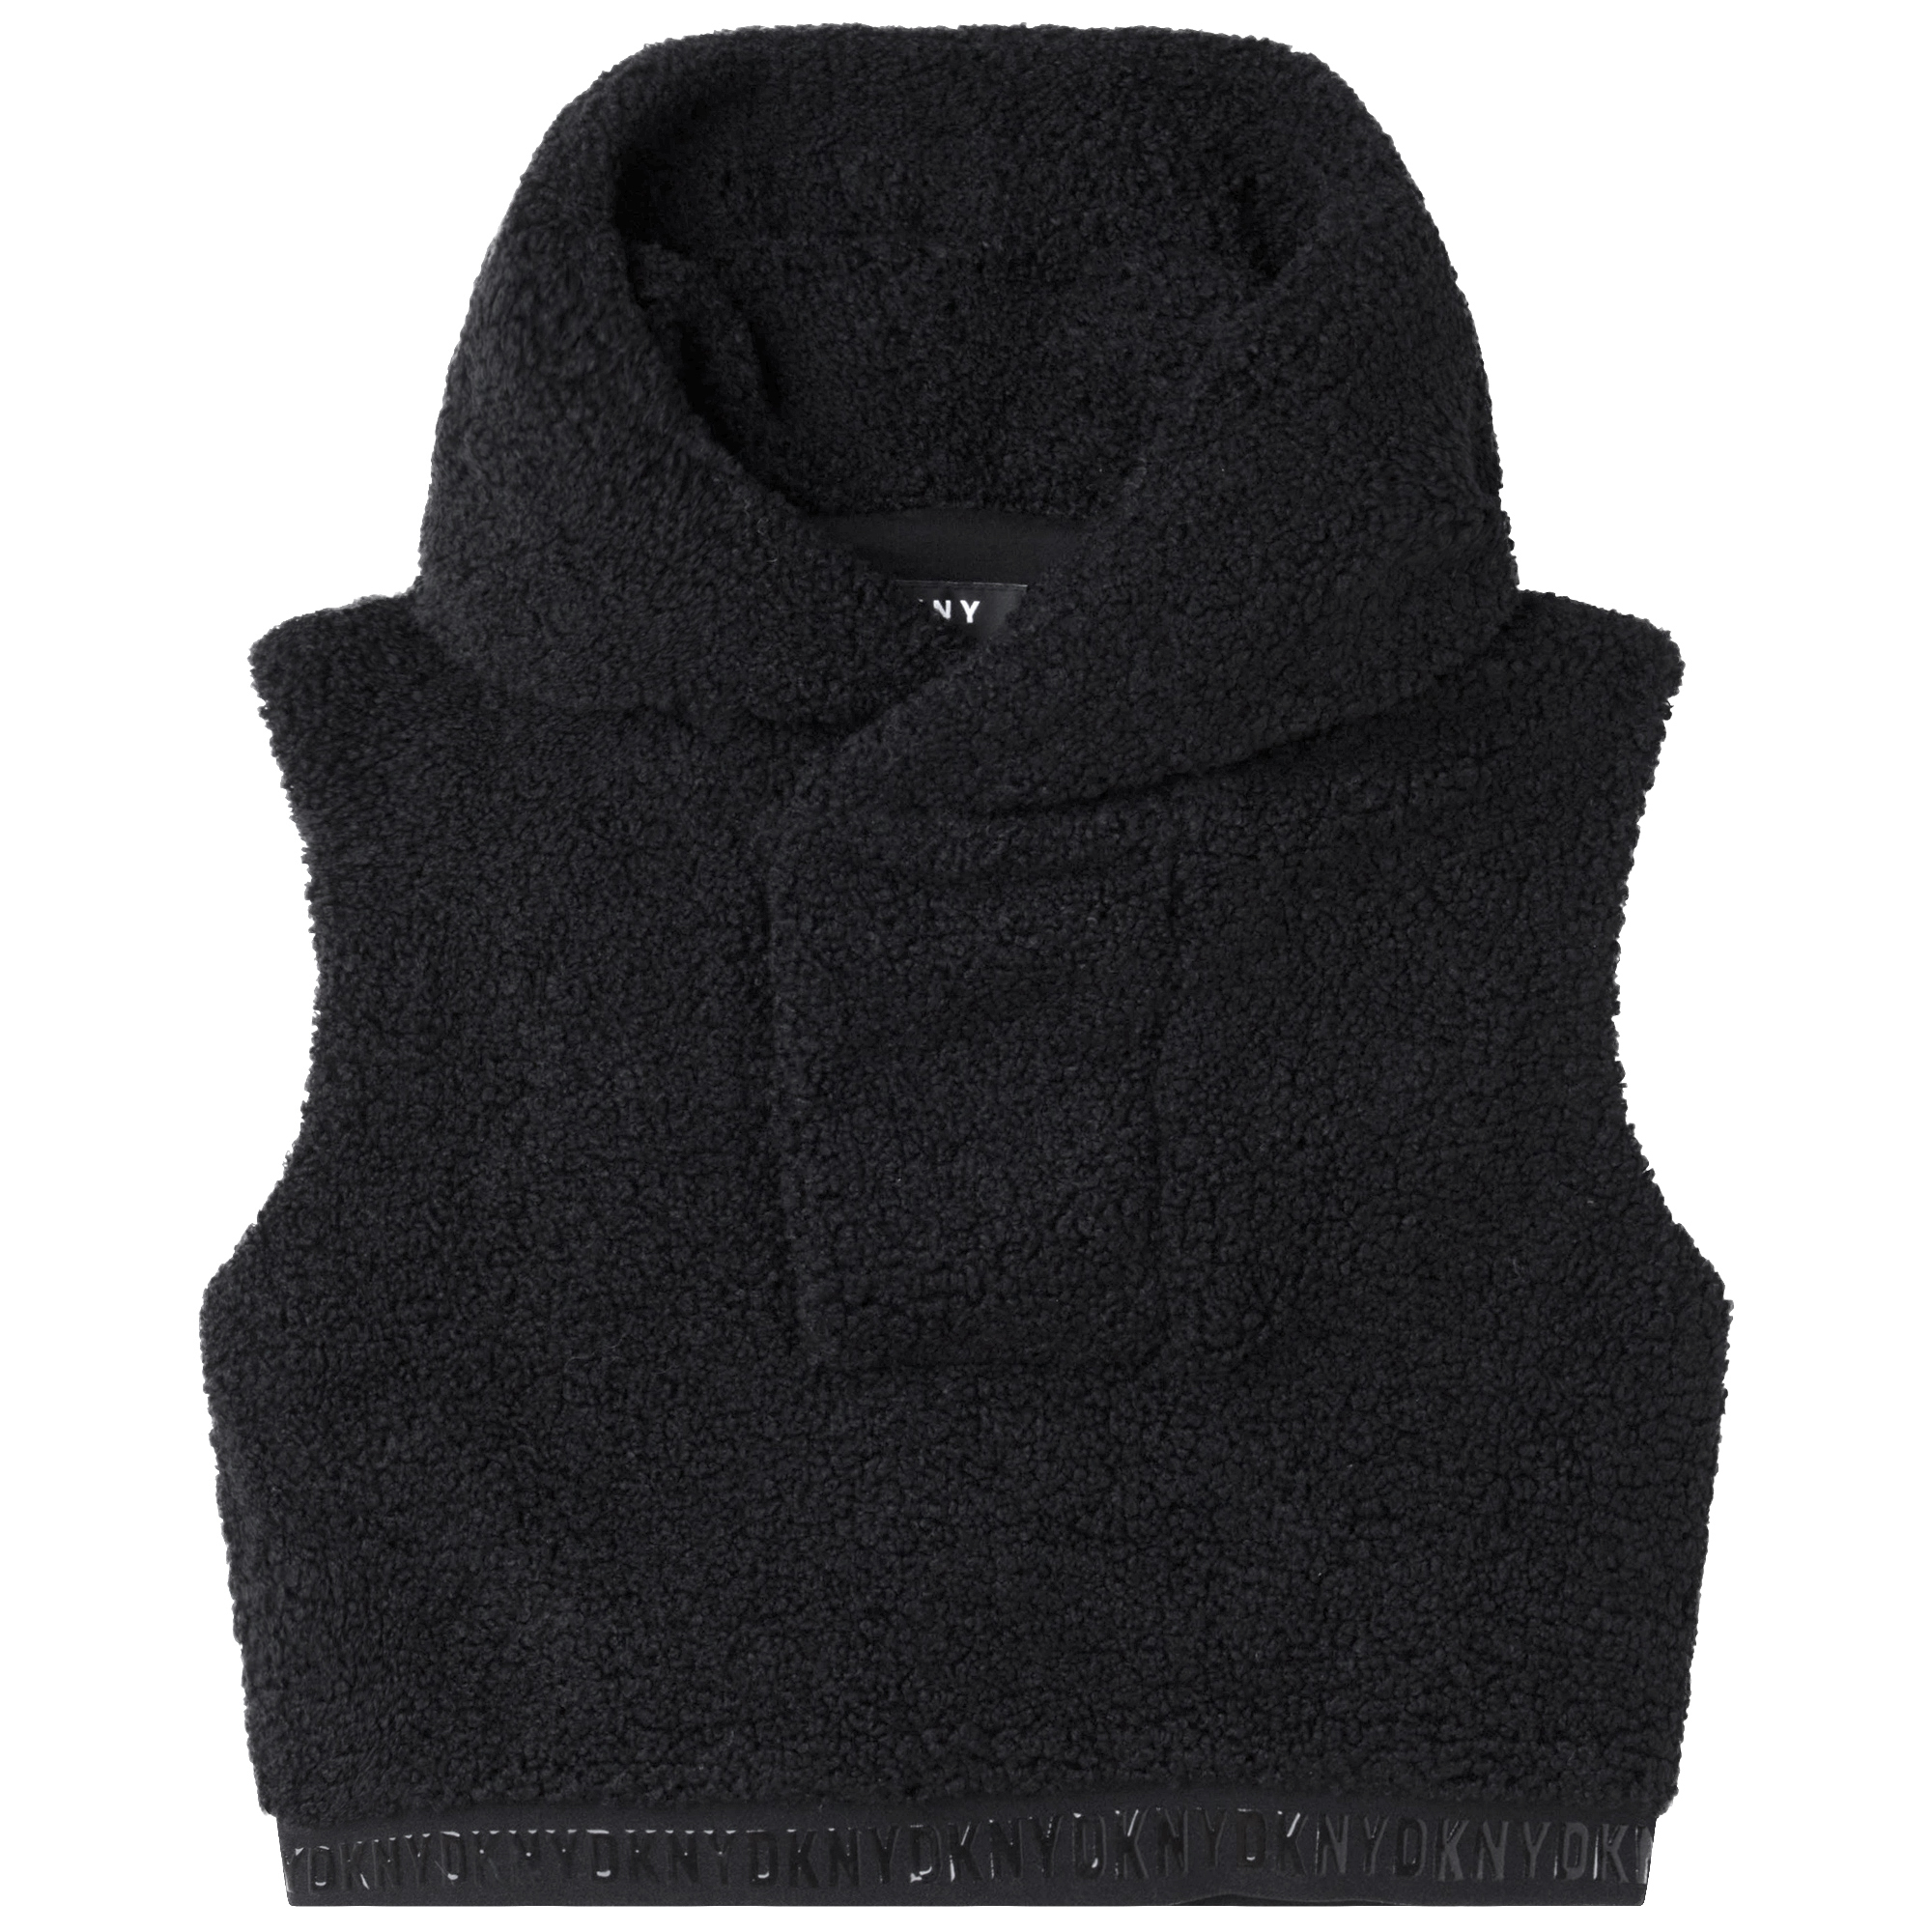 Sleeveless hooded sweatshirt DKNY for GIRL